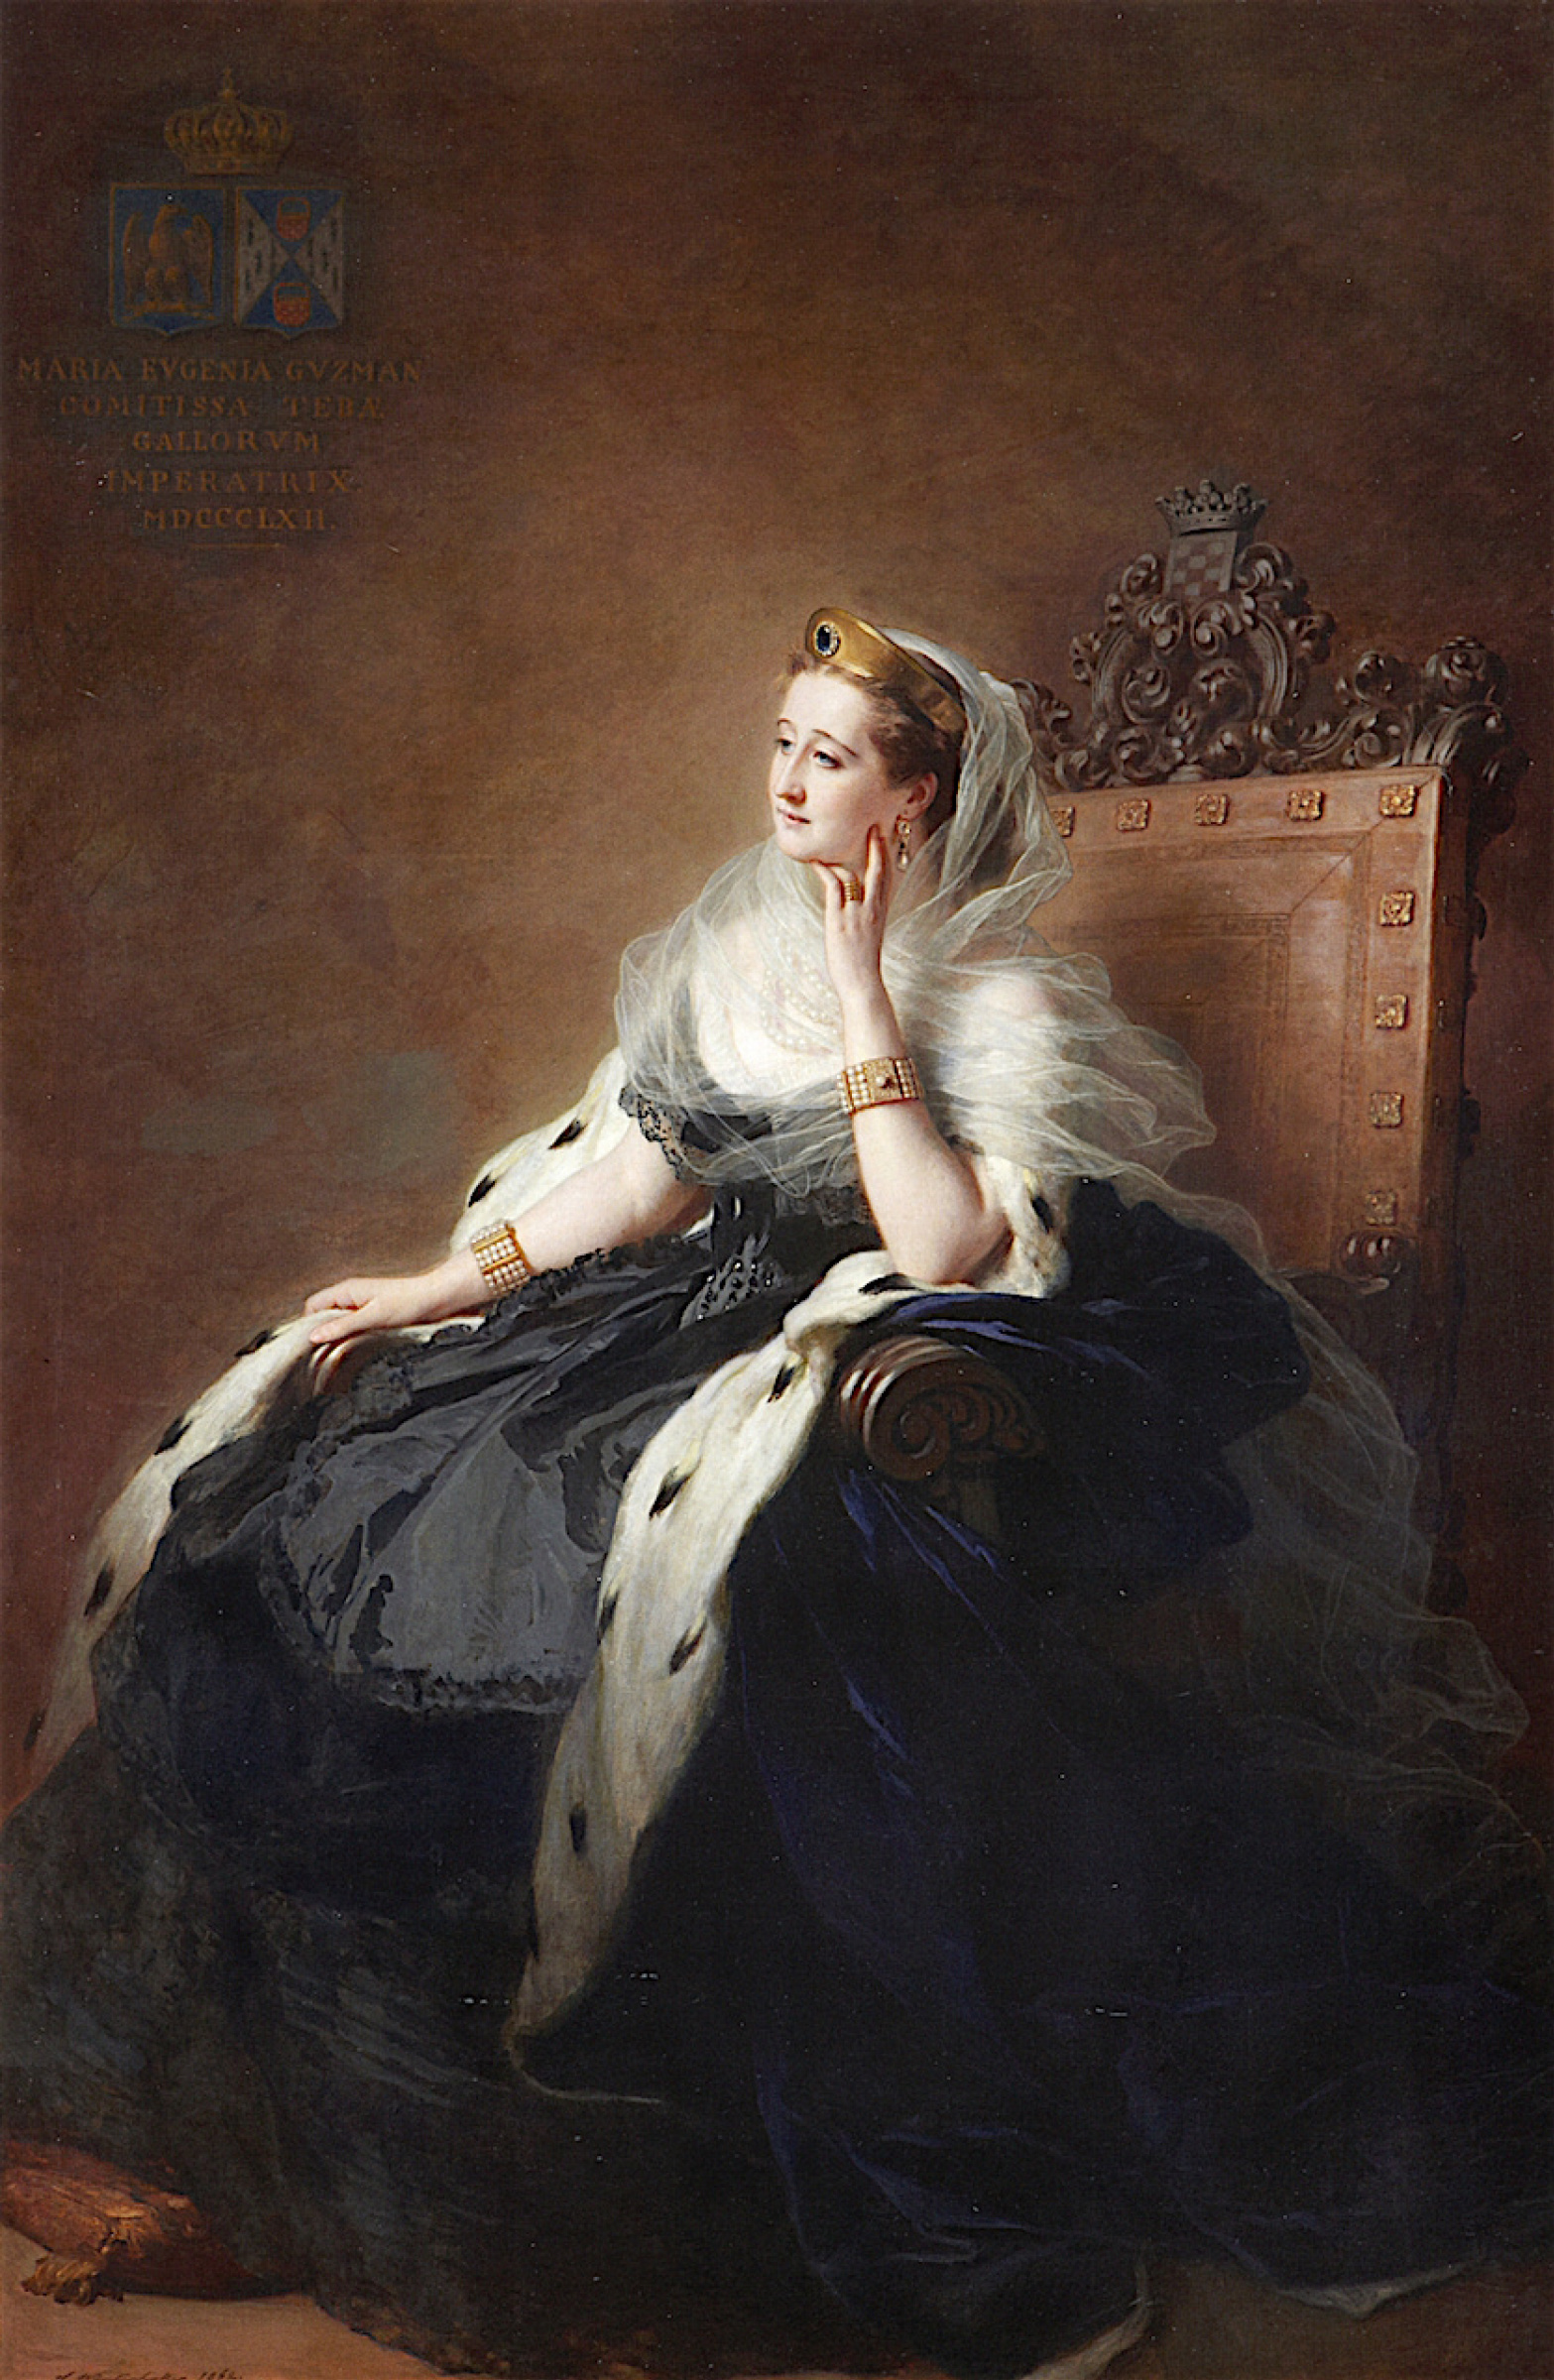 ipernity: The Empress Eugenie by Winterhalter in the Metropolitan